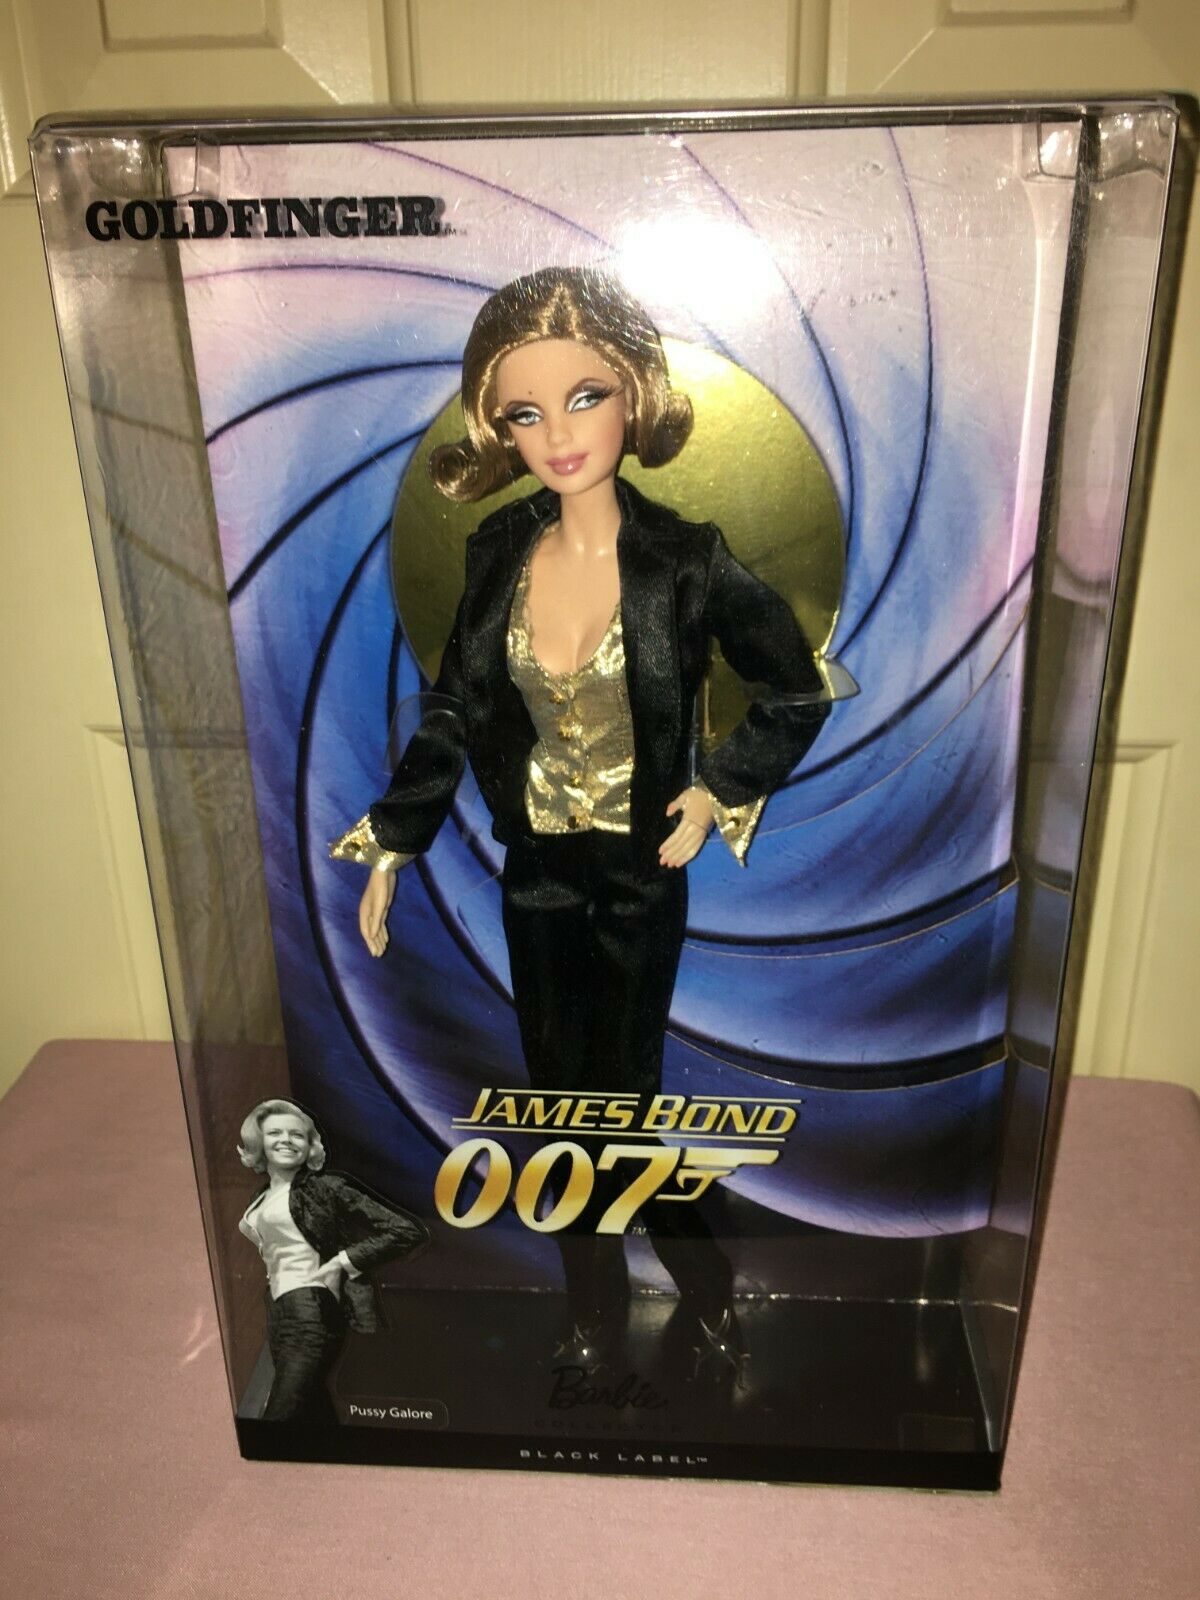 James Bond 007 Barbie Pussy Galore (honor Blackman) - Goldfinger; Nrfb; 2009